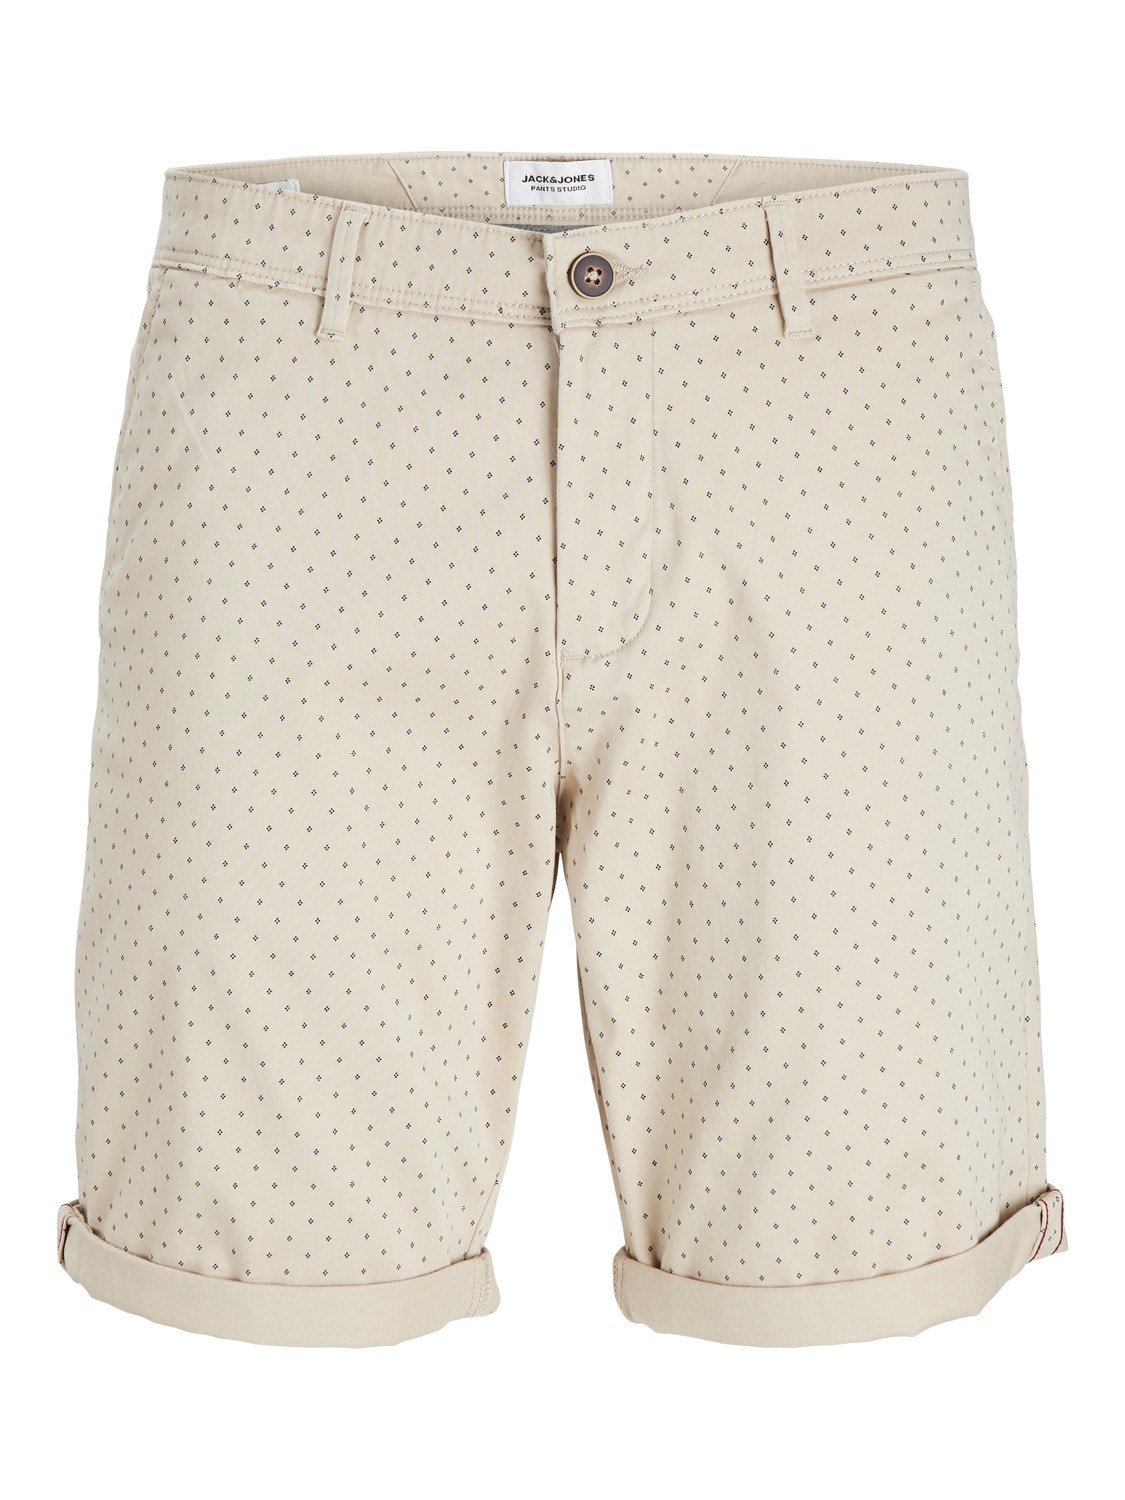 Jack & Jones Regular Fit Chino shorts -Oxford Tan - 12230336